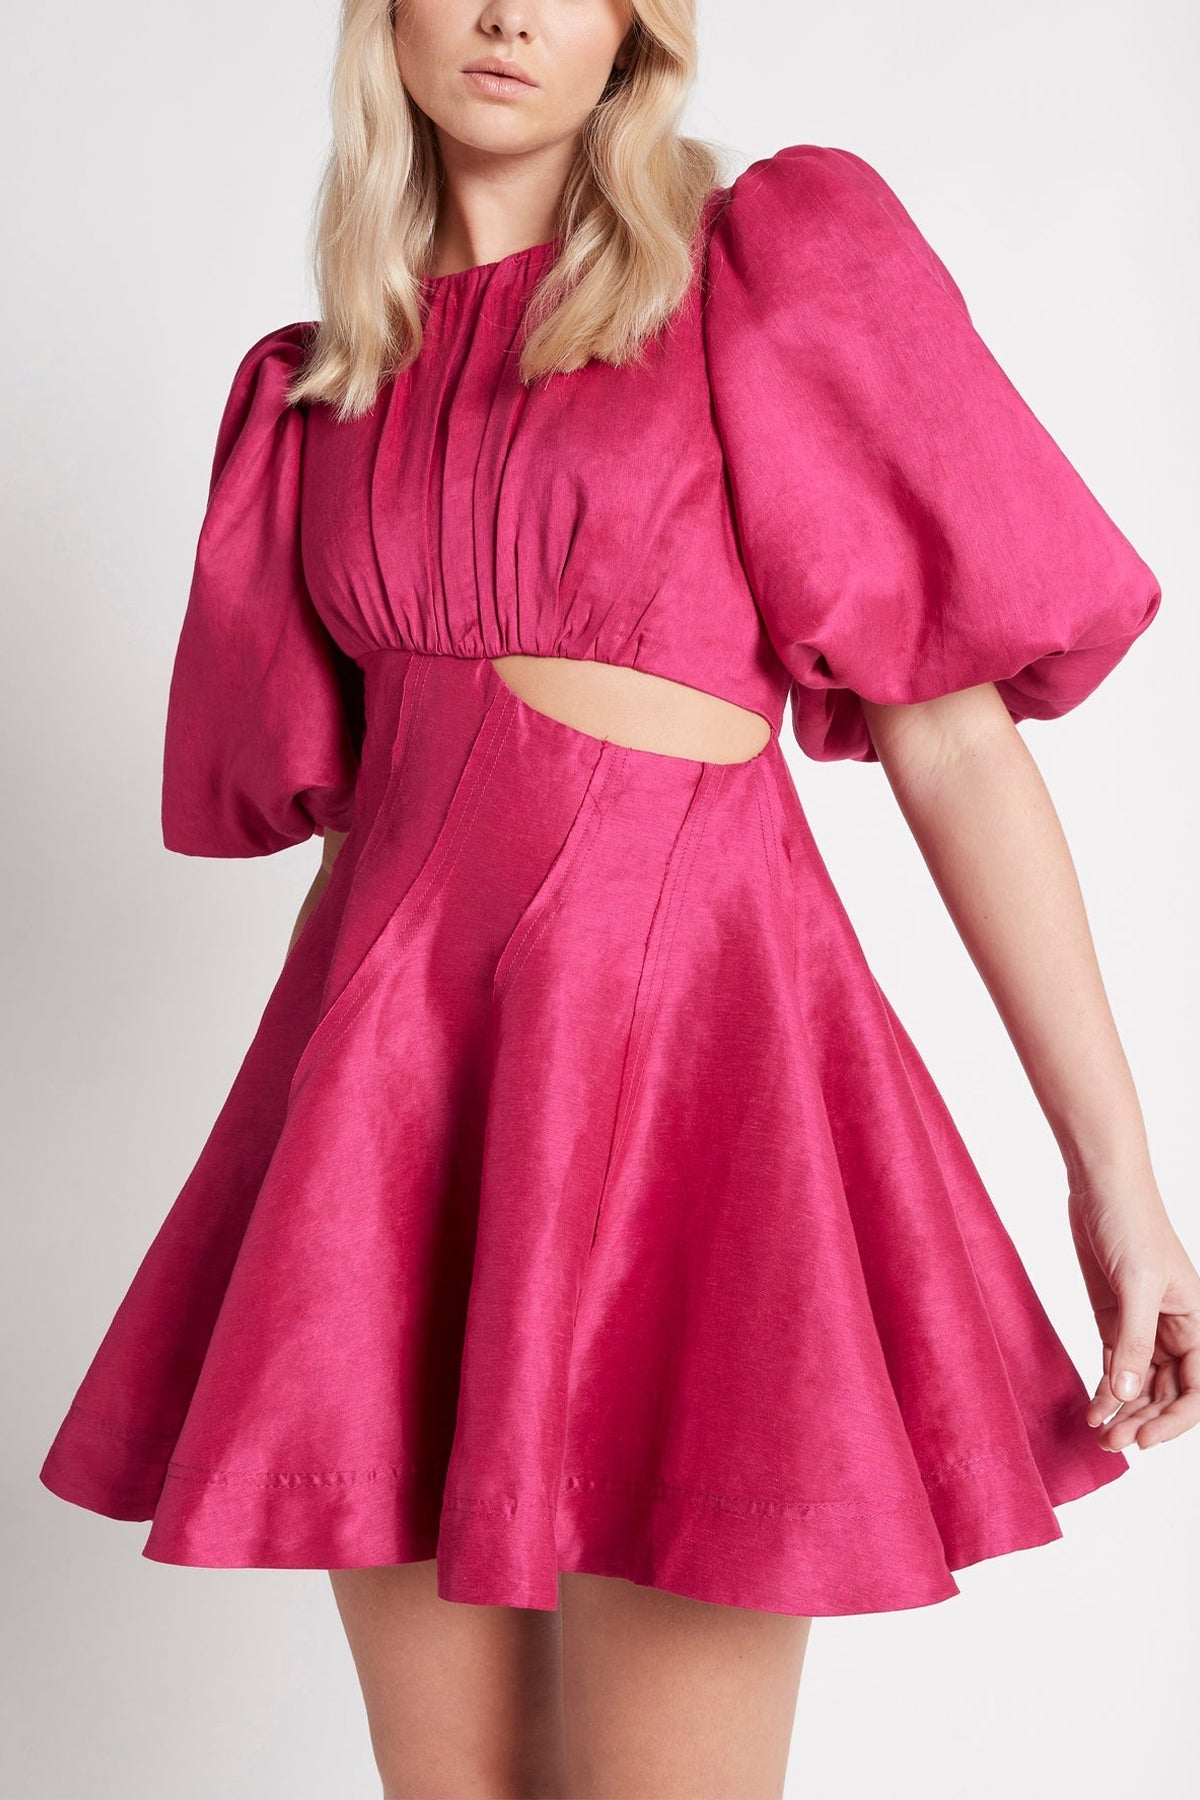 Admiration Asymmetric Mini Dress in Fuchsia - shop-olivia.com